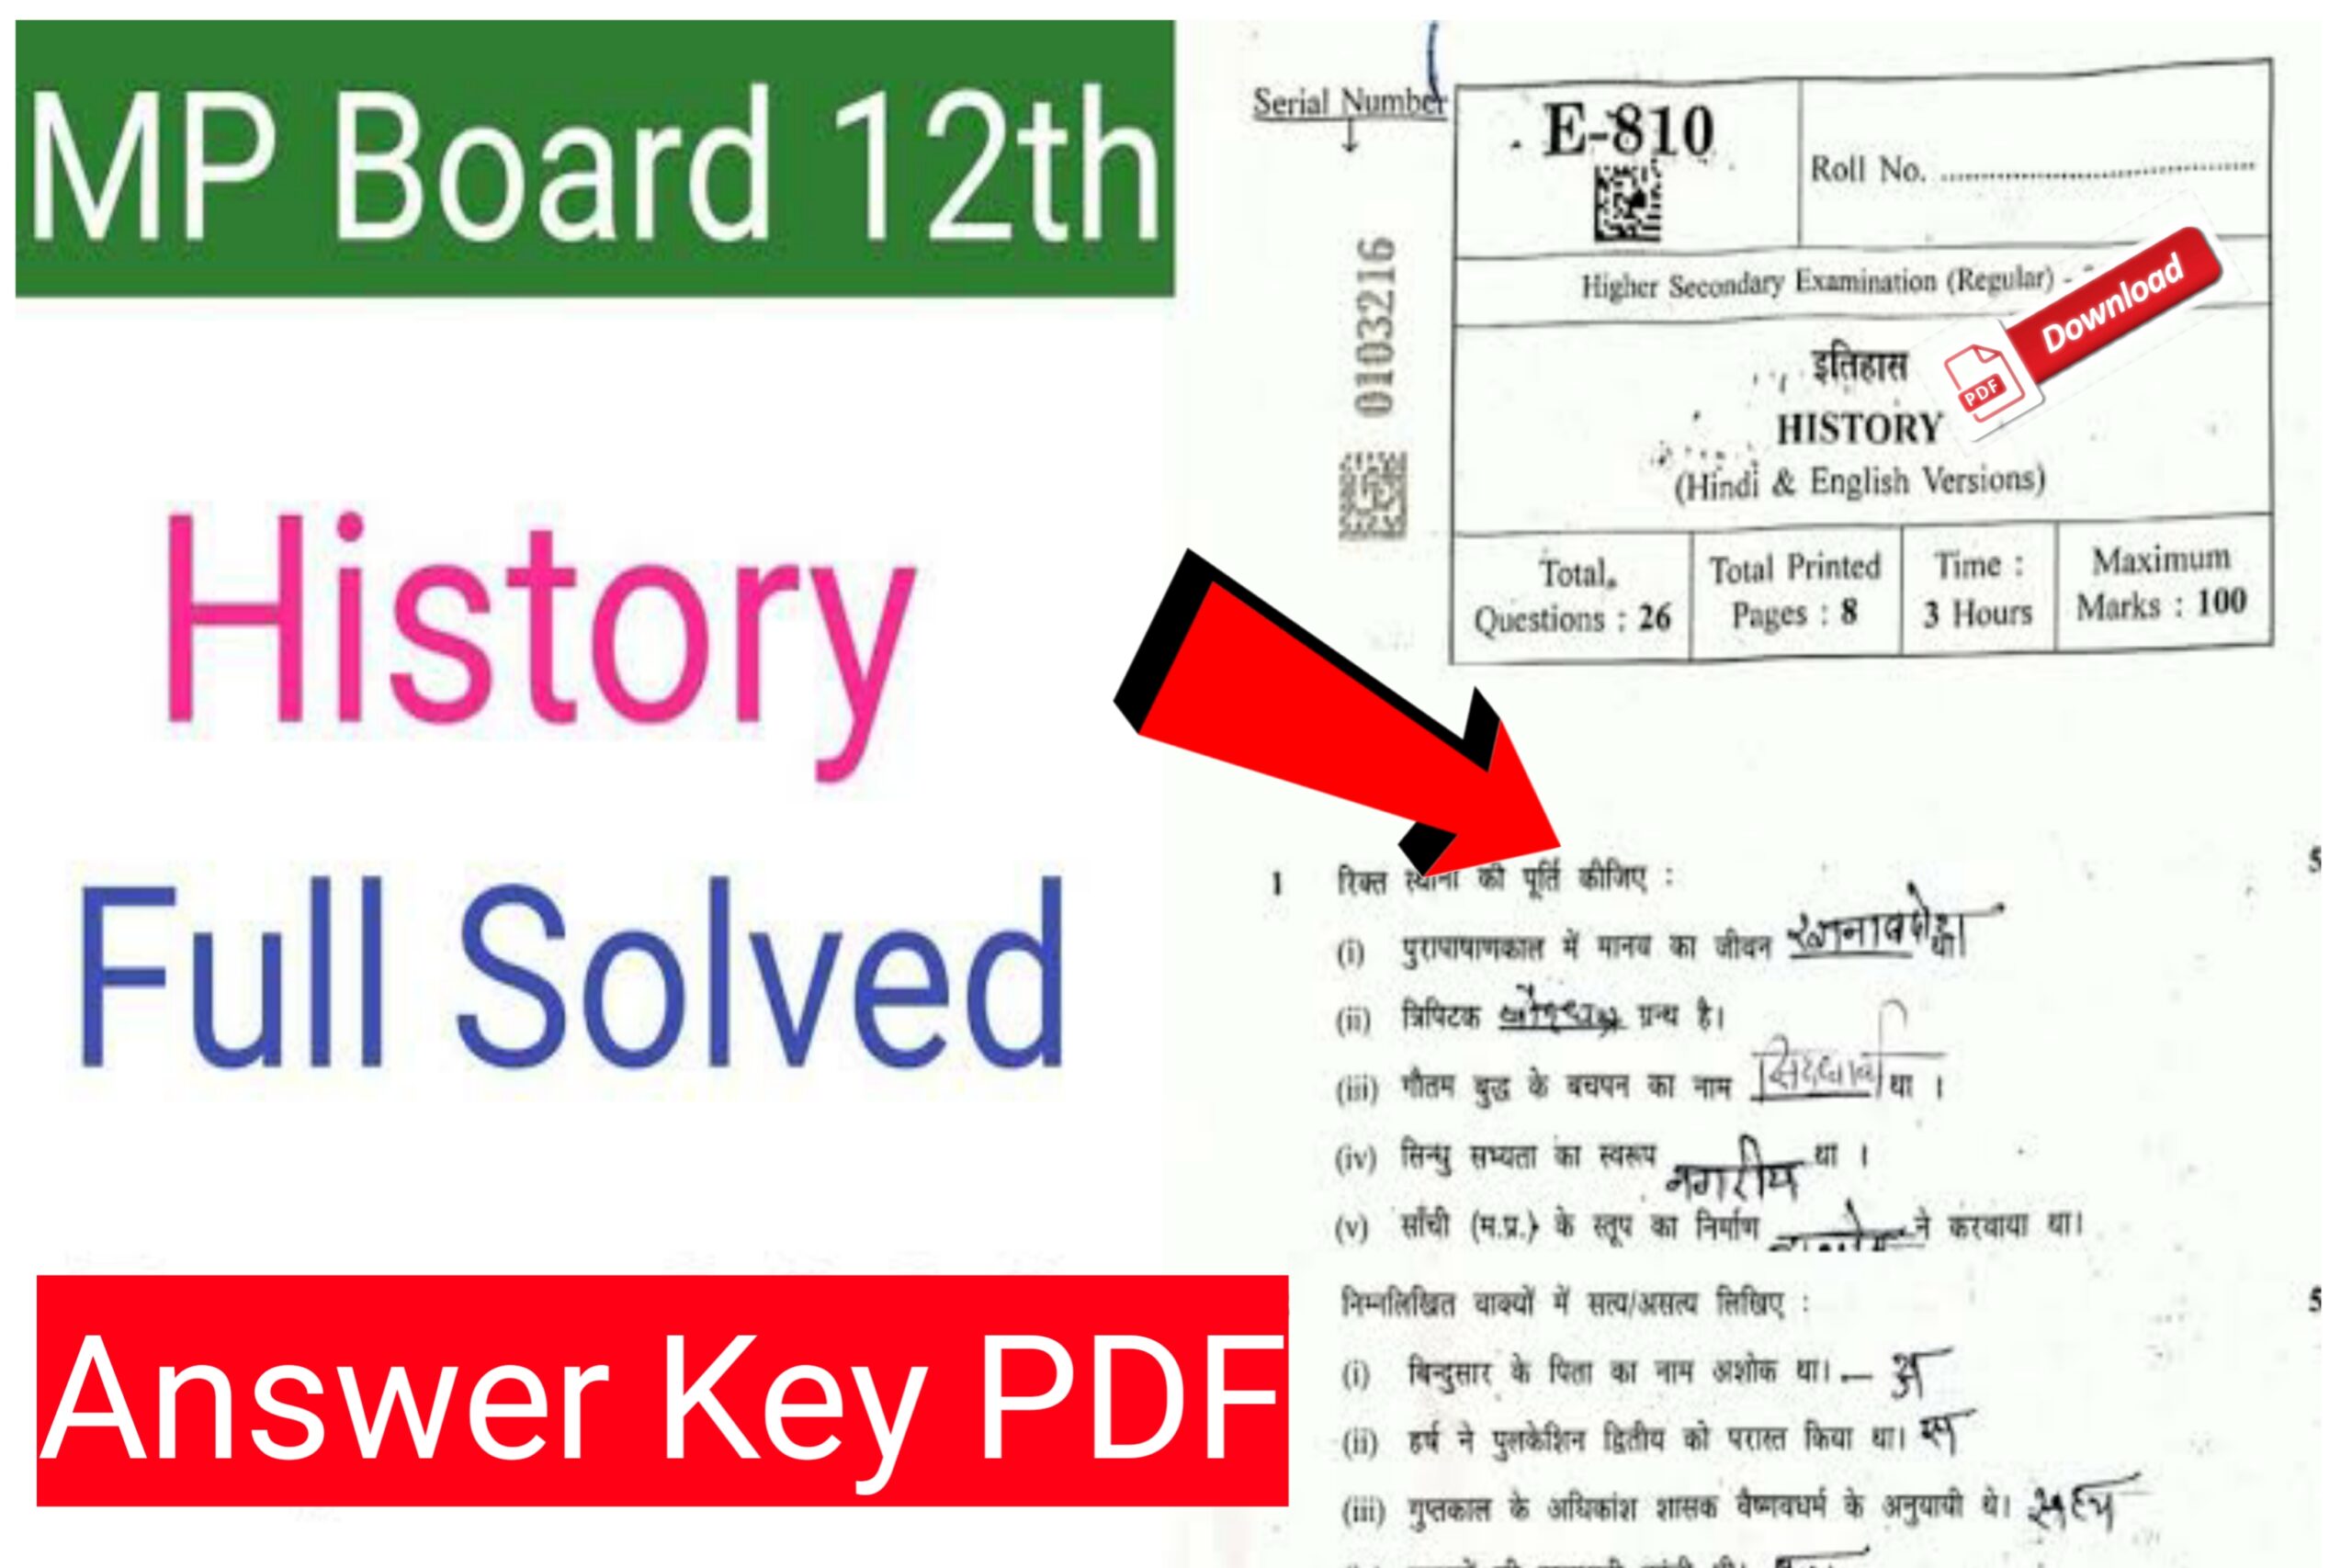 MP Board Class 12th History Answer Key